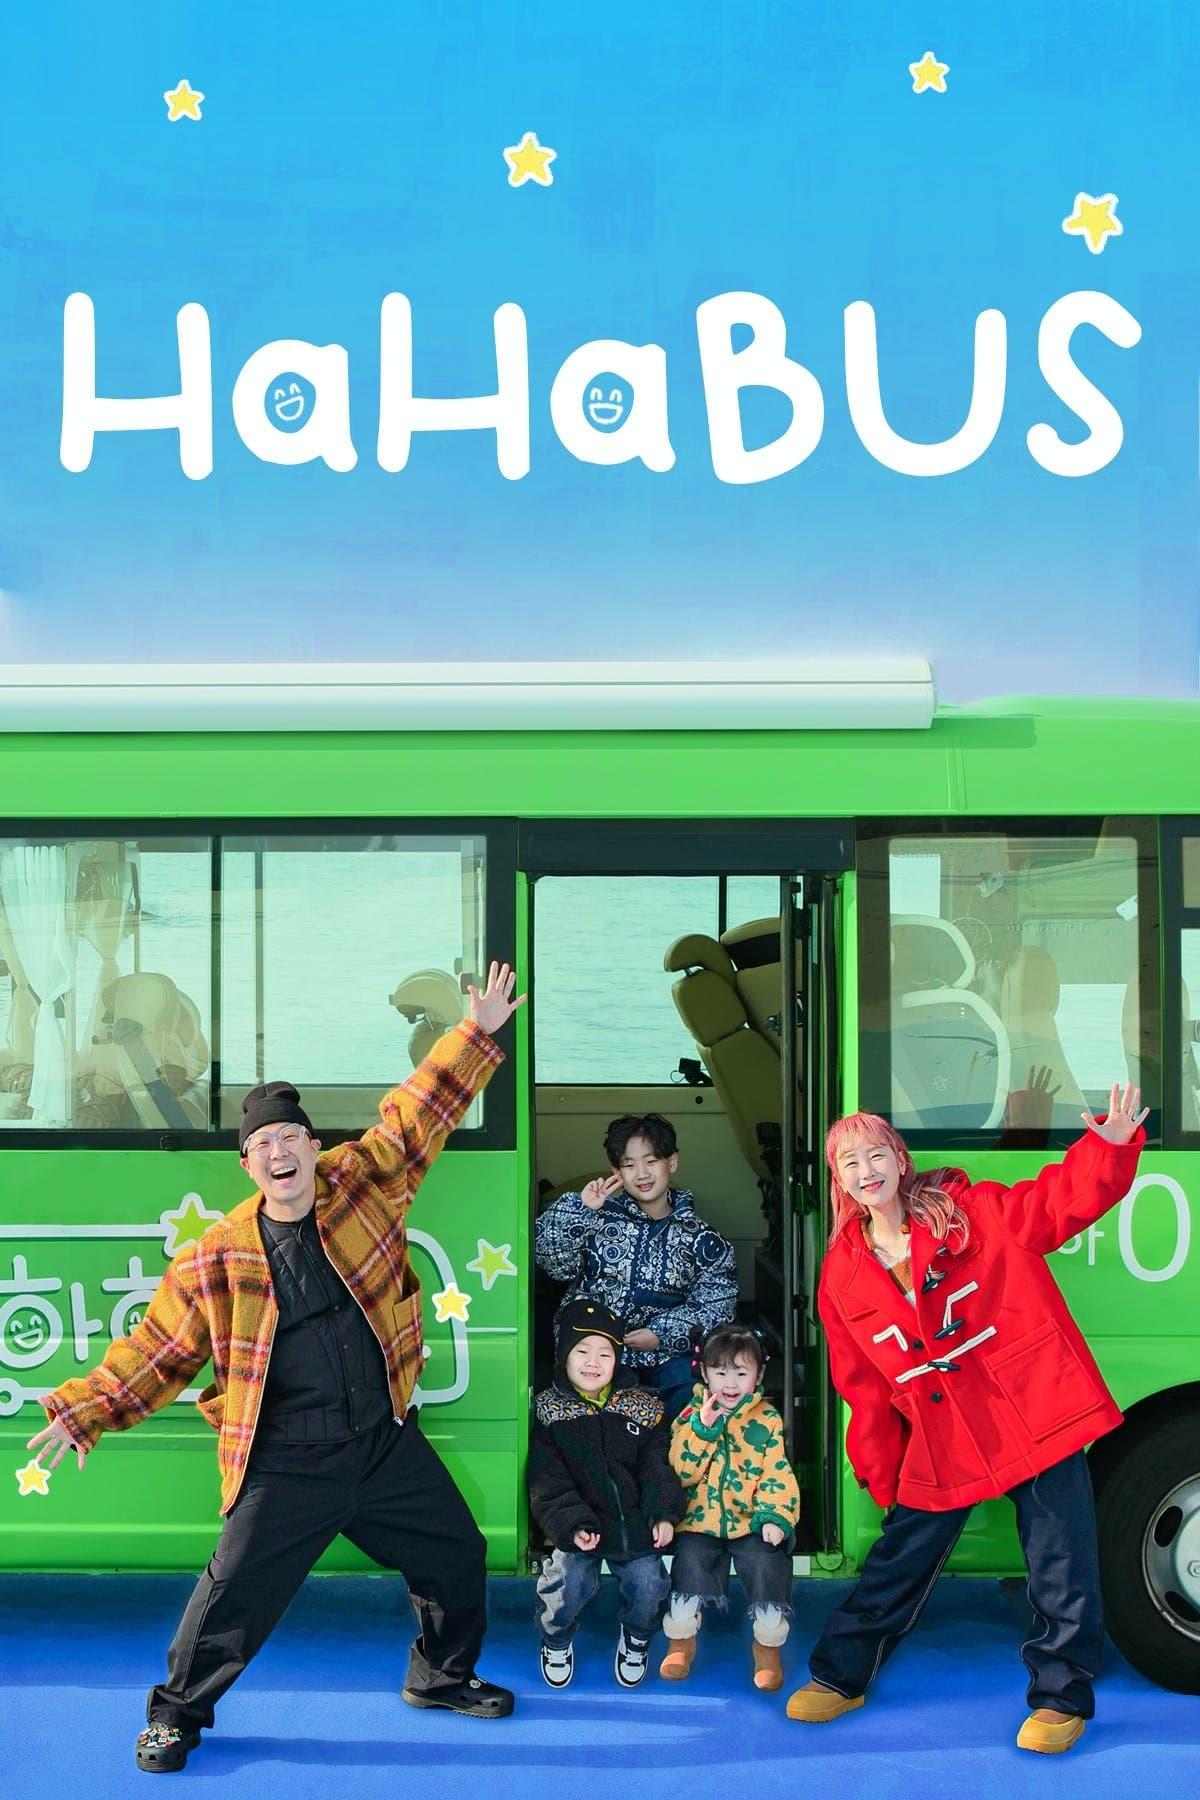 Haha Bus poster